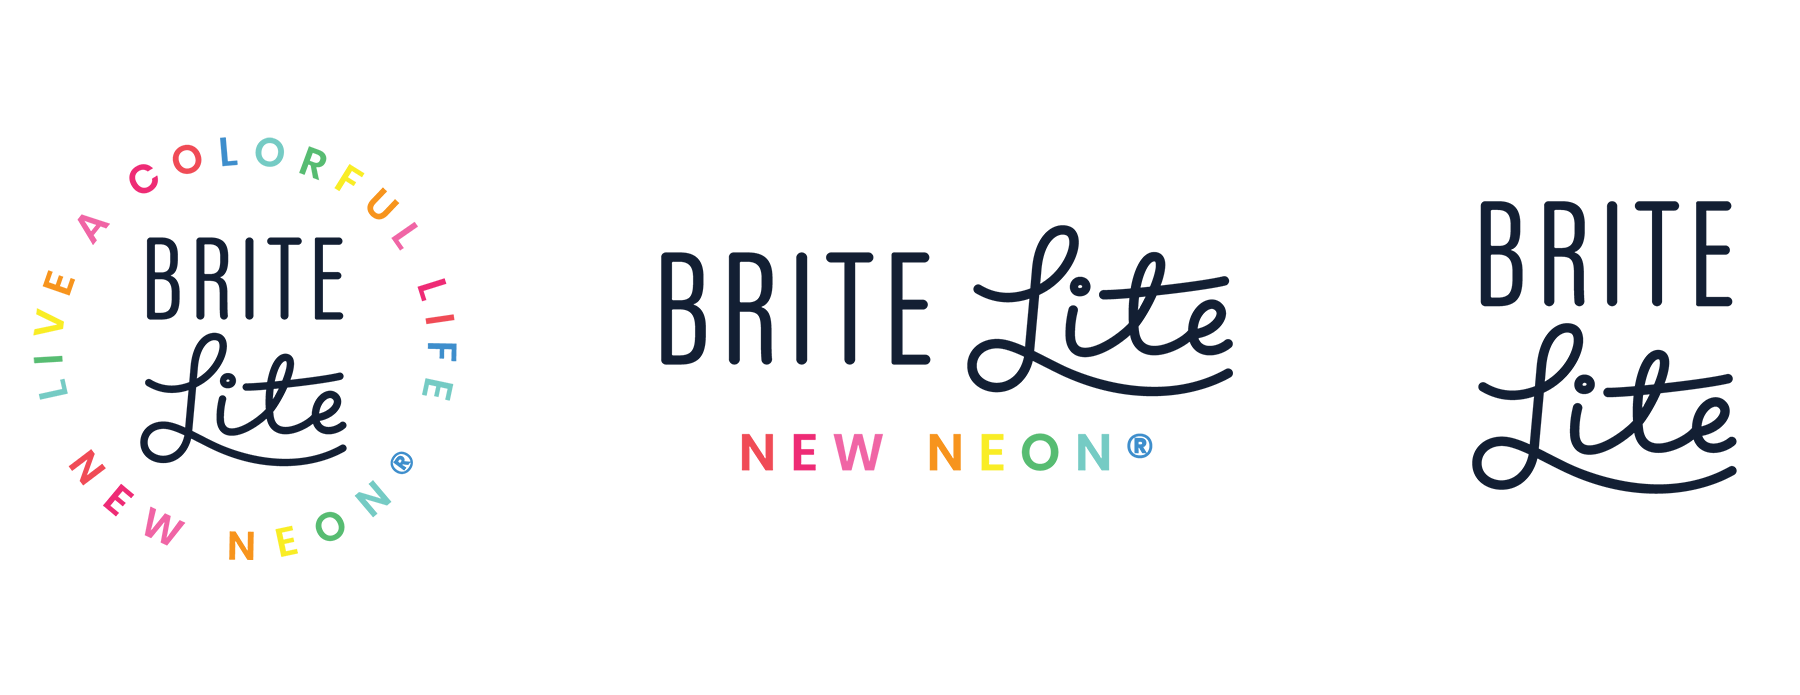 Brite Lite logos variations, featuring circular logo lockup with their tagline 